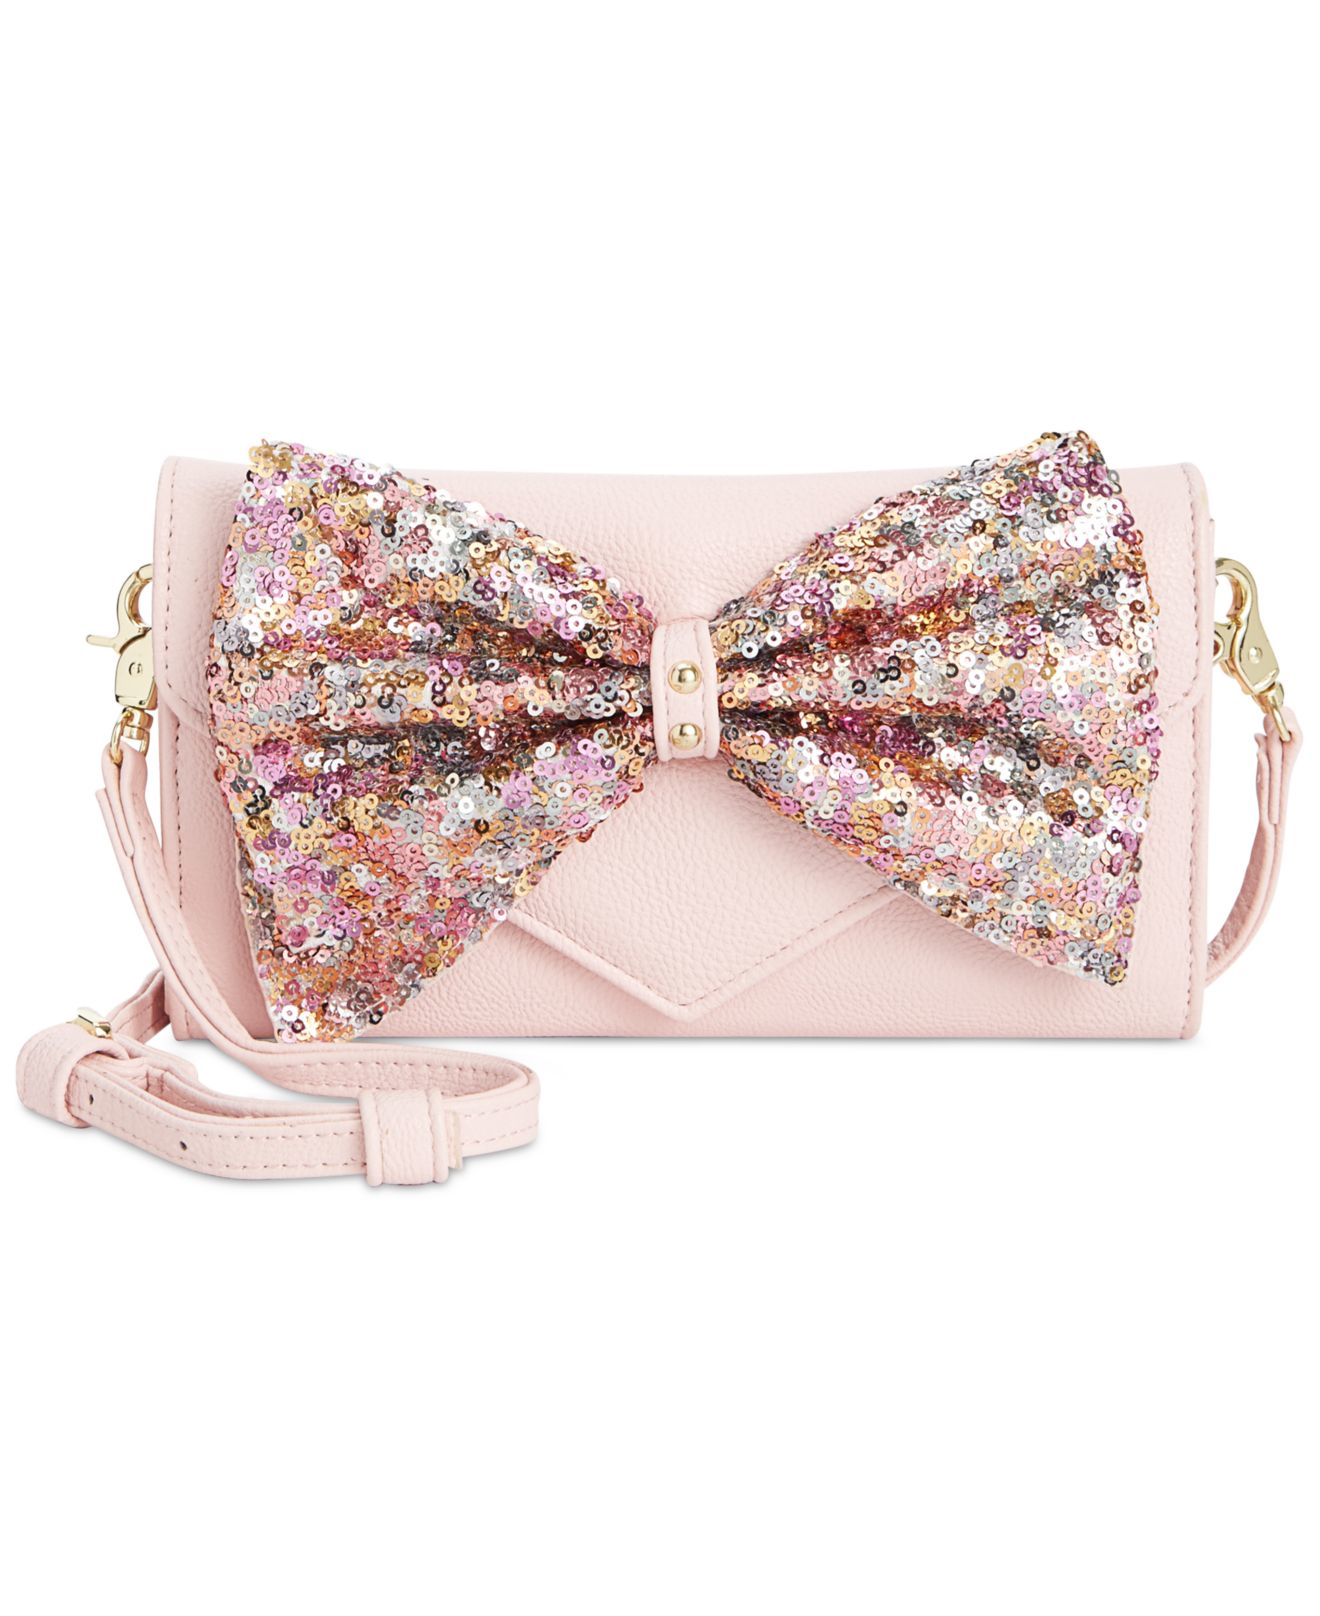 Betsey Johnson Macy's Exclusive Bow Sequin Wallet Crossbody in Pink